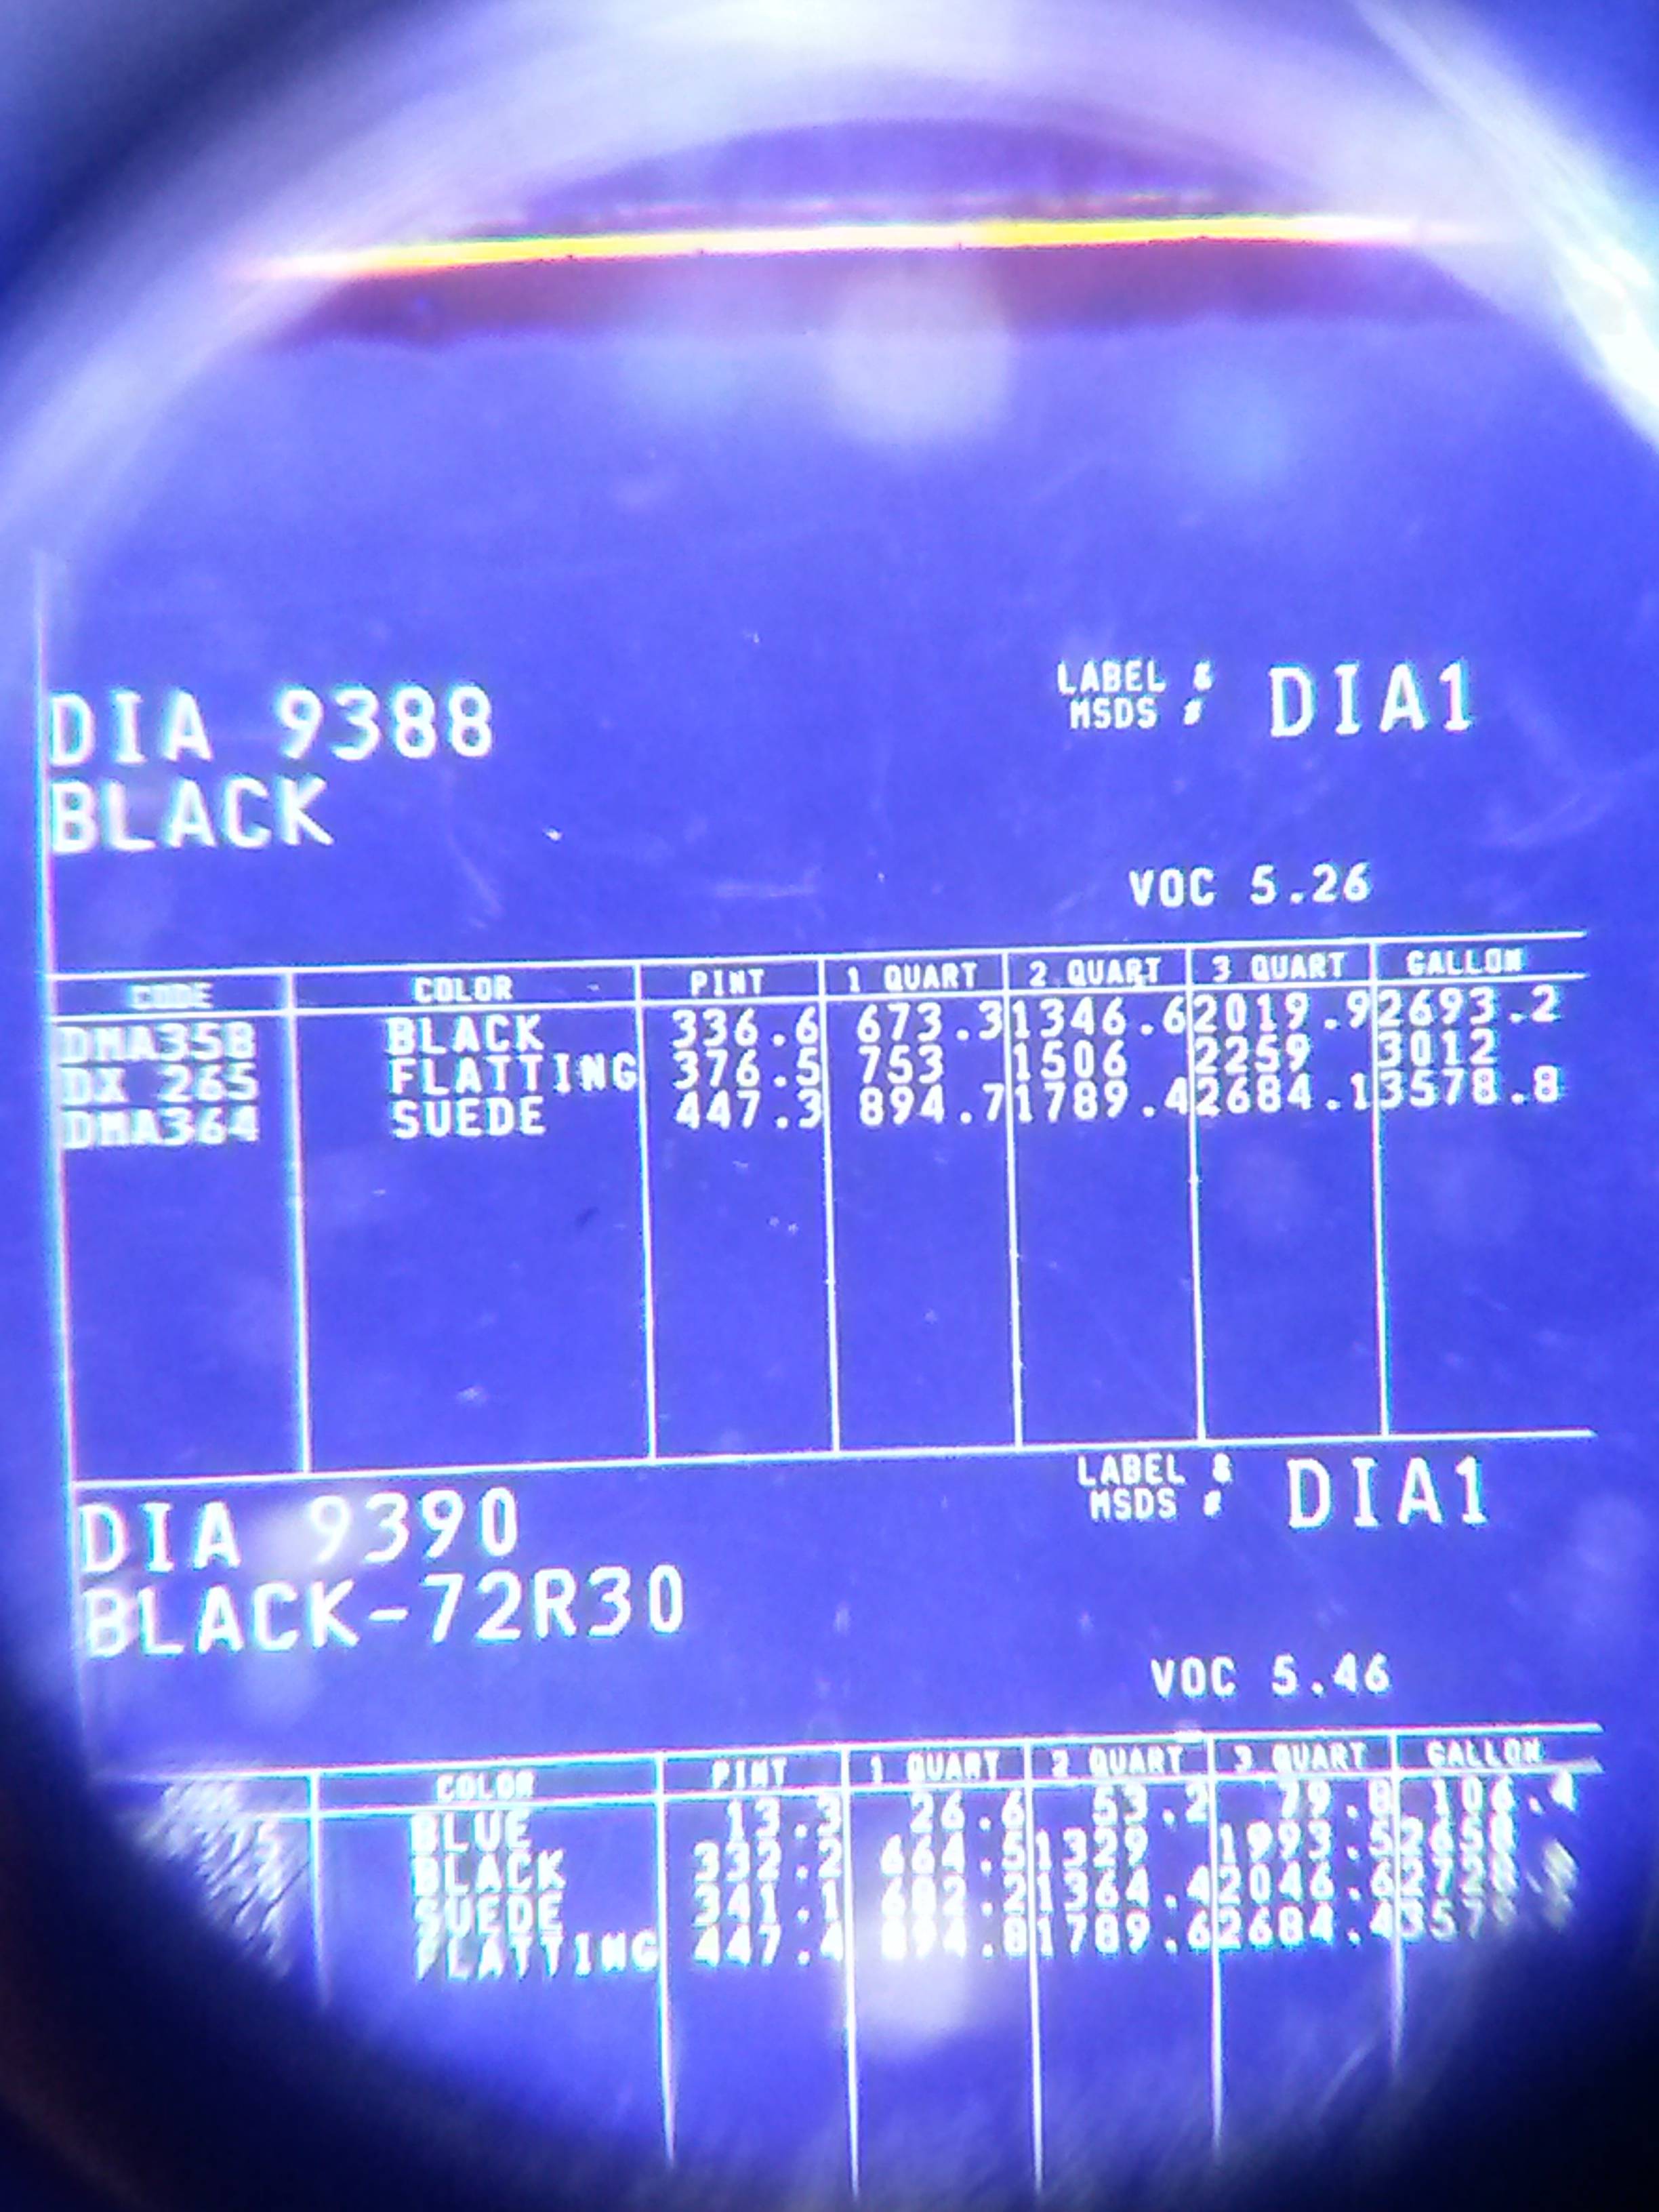 DAR 9388 BLACK FLATISH.jpg